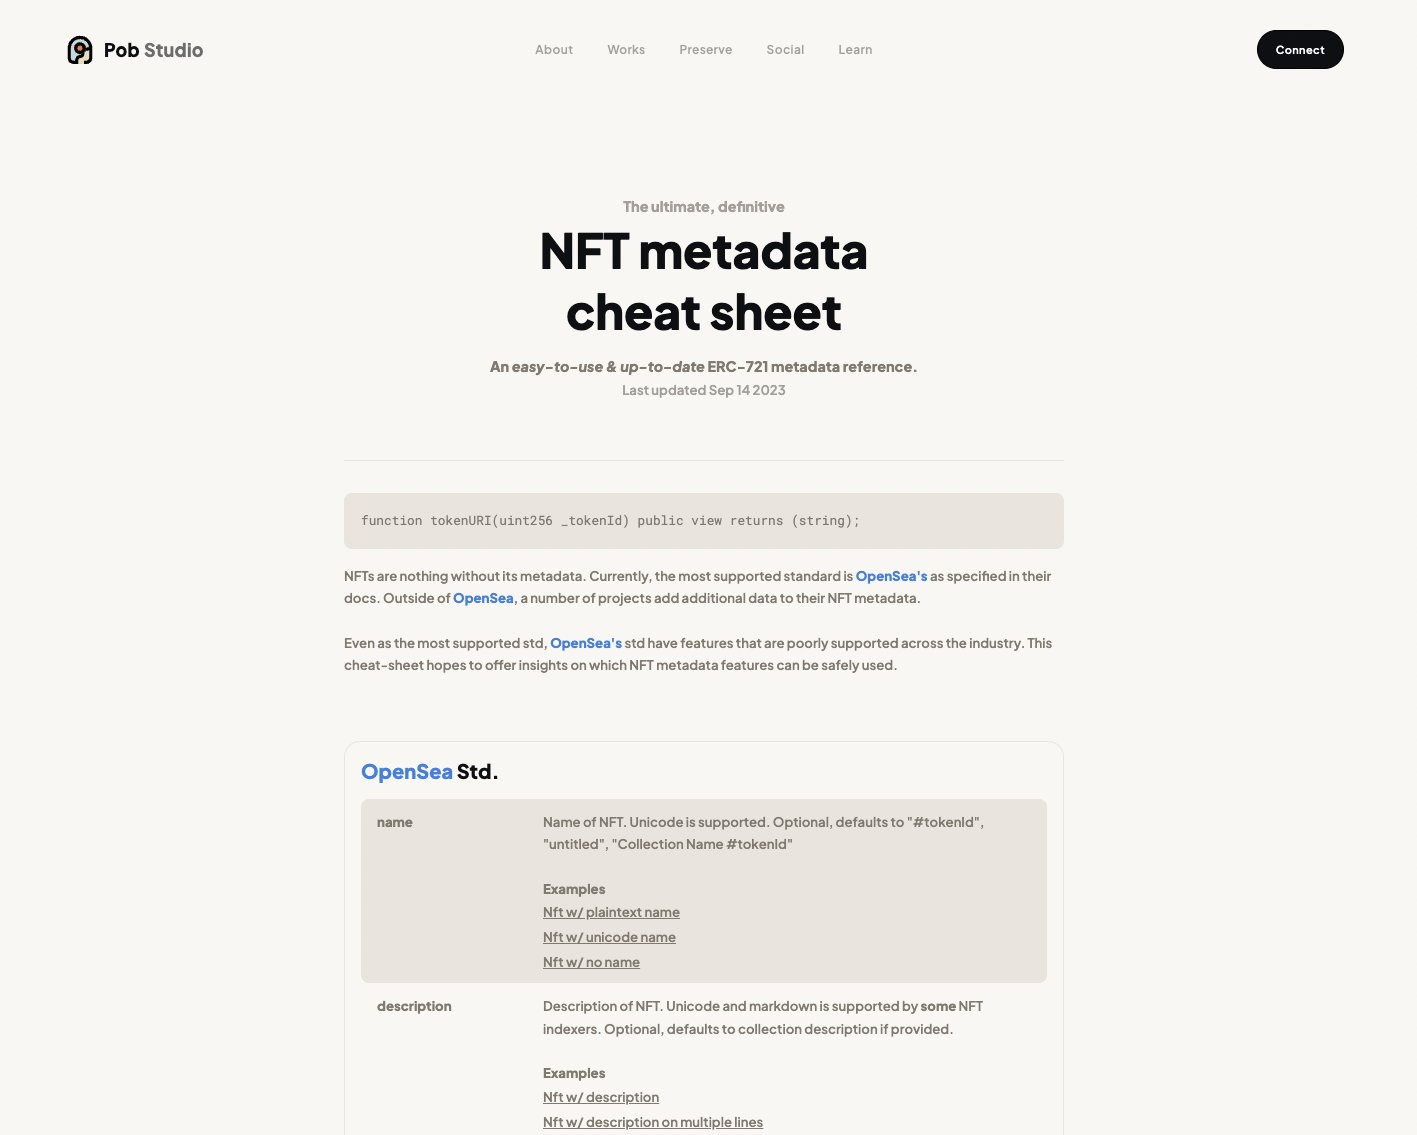 A 10X improvement over the NFT metadata standard made by OpenSea